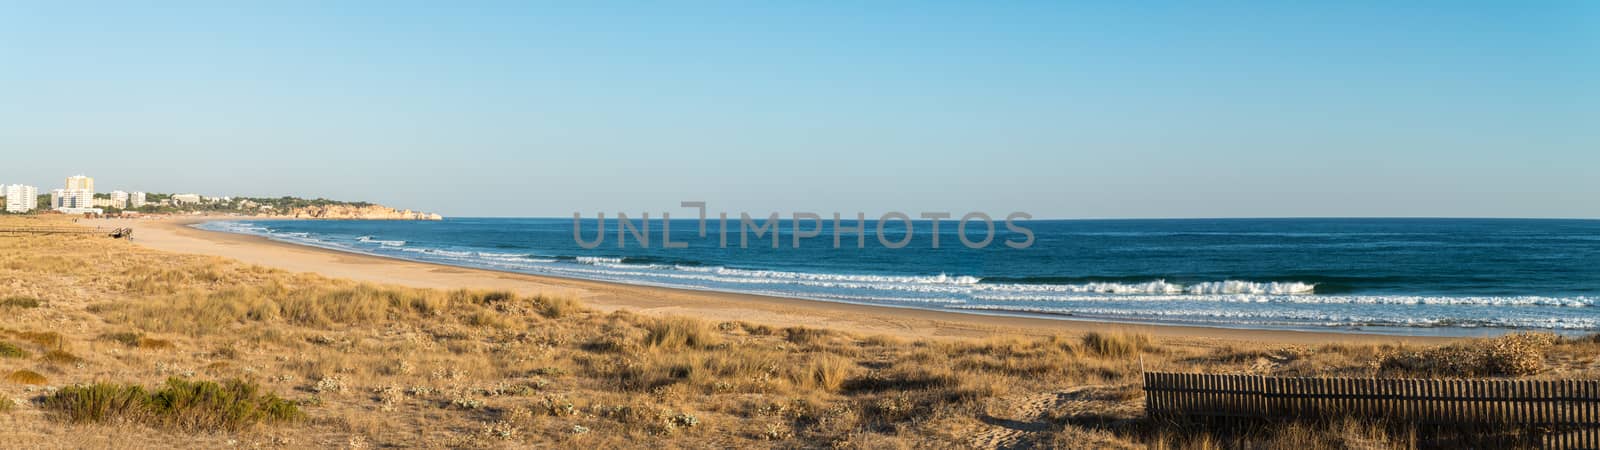 A view of Praia de Alvor in Portimao, Algarve region, Portugal.